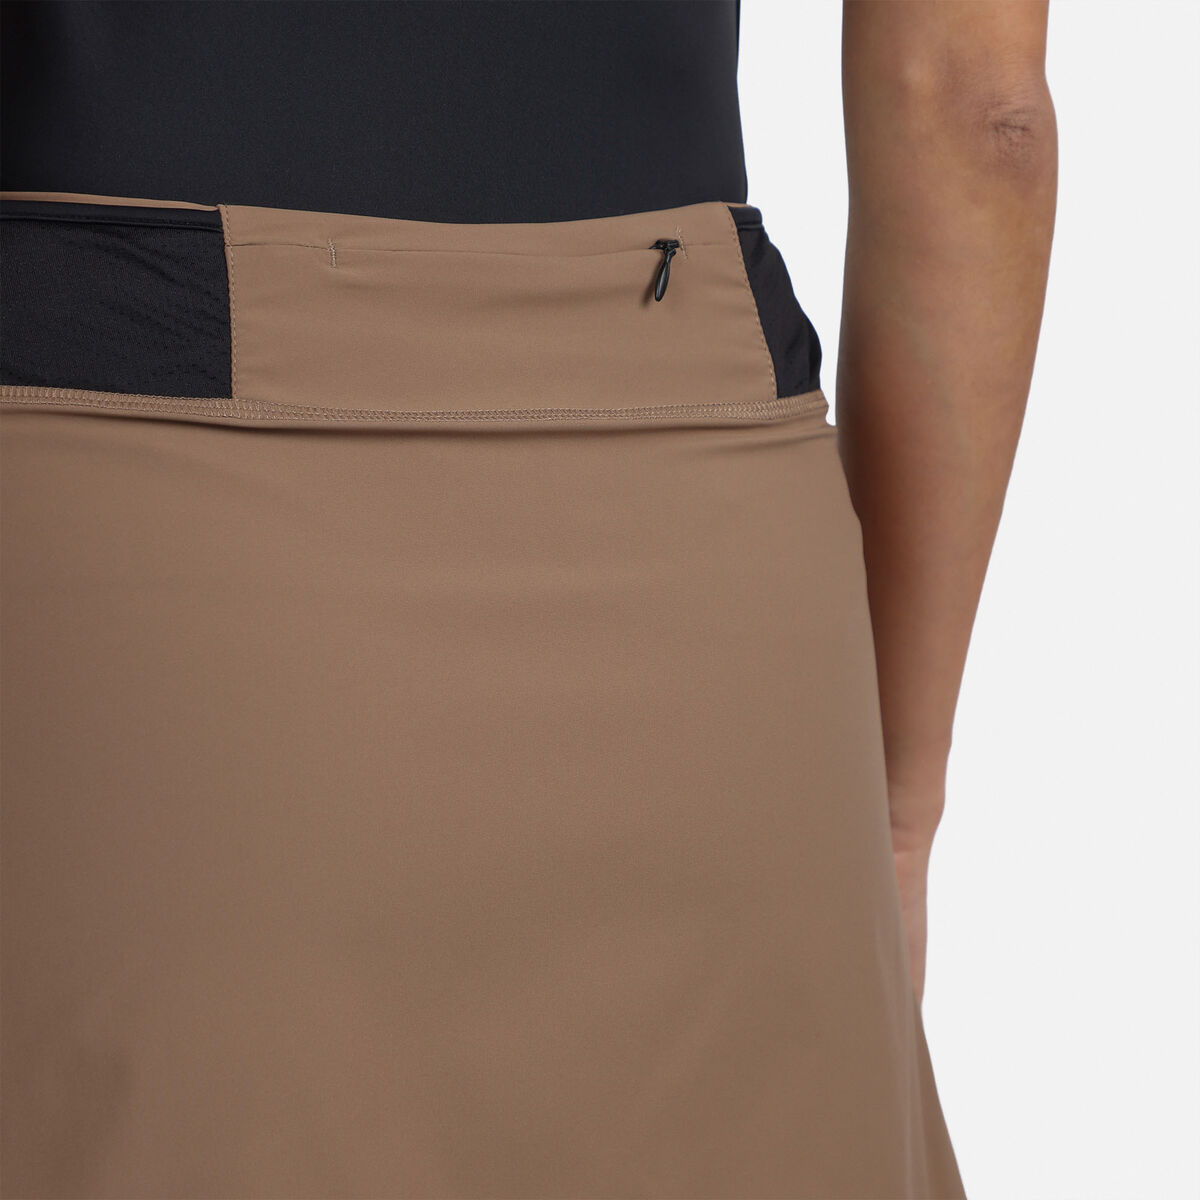 Rossignol Women's SKPR Skirt brown